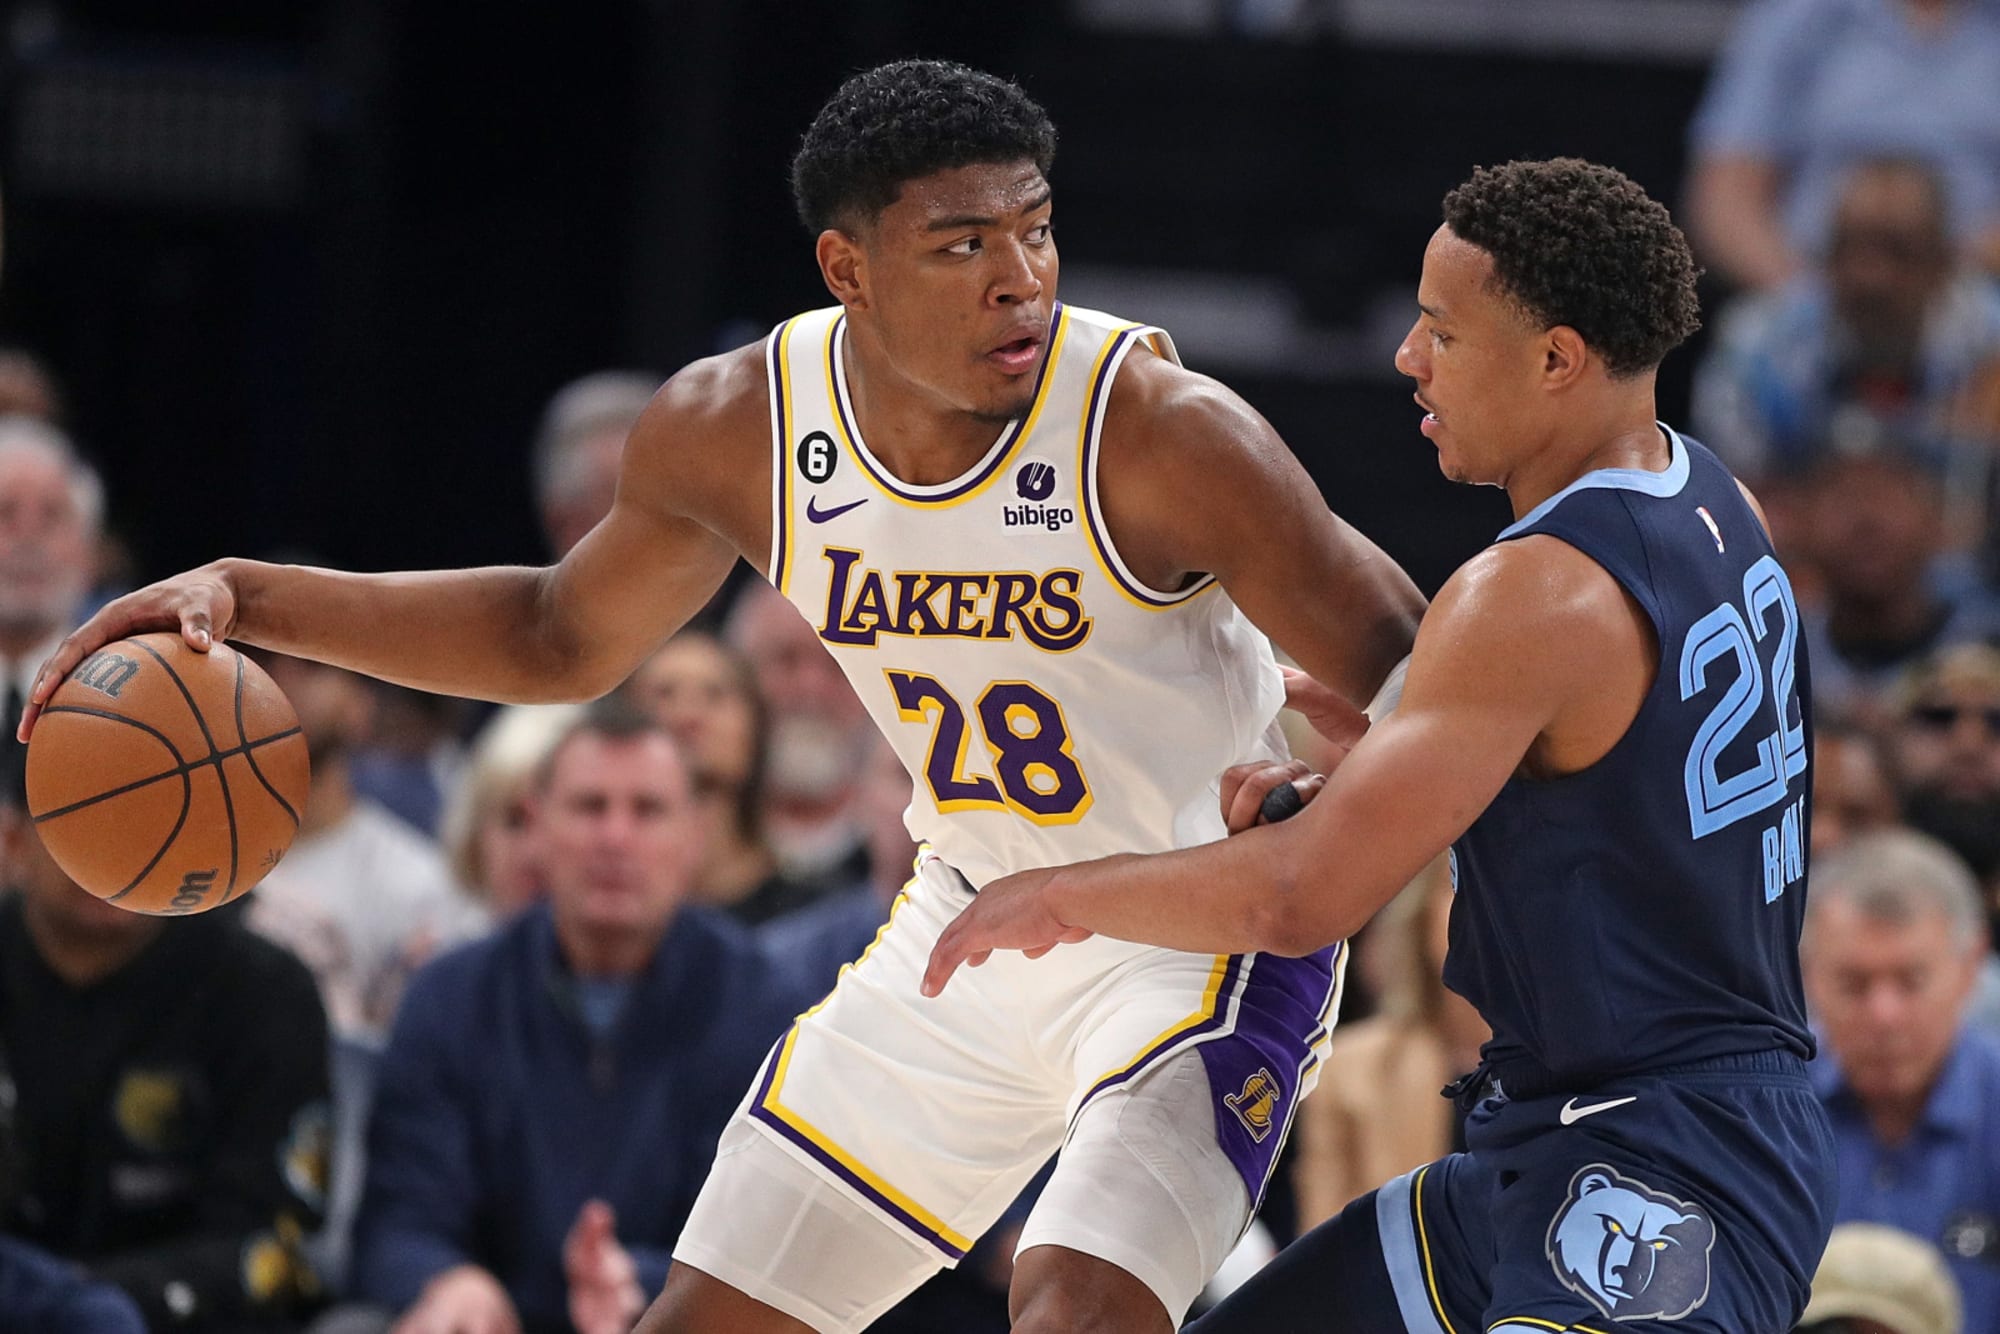 Rui Hachimura picked Lakers number inspired by Kobe Bryant